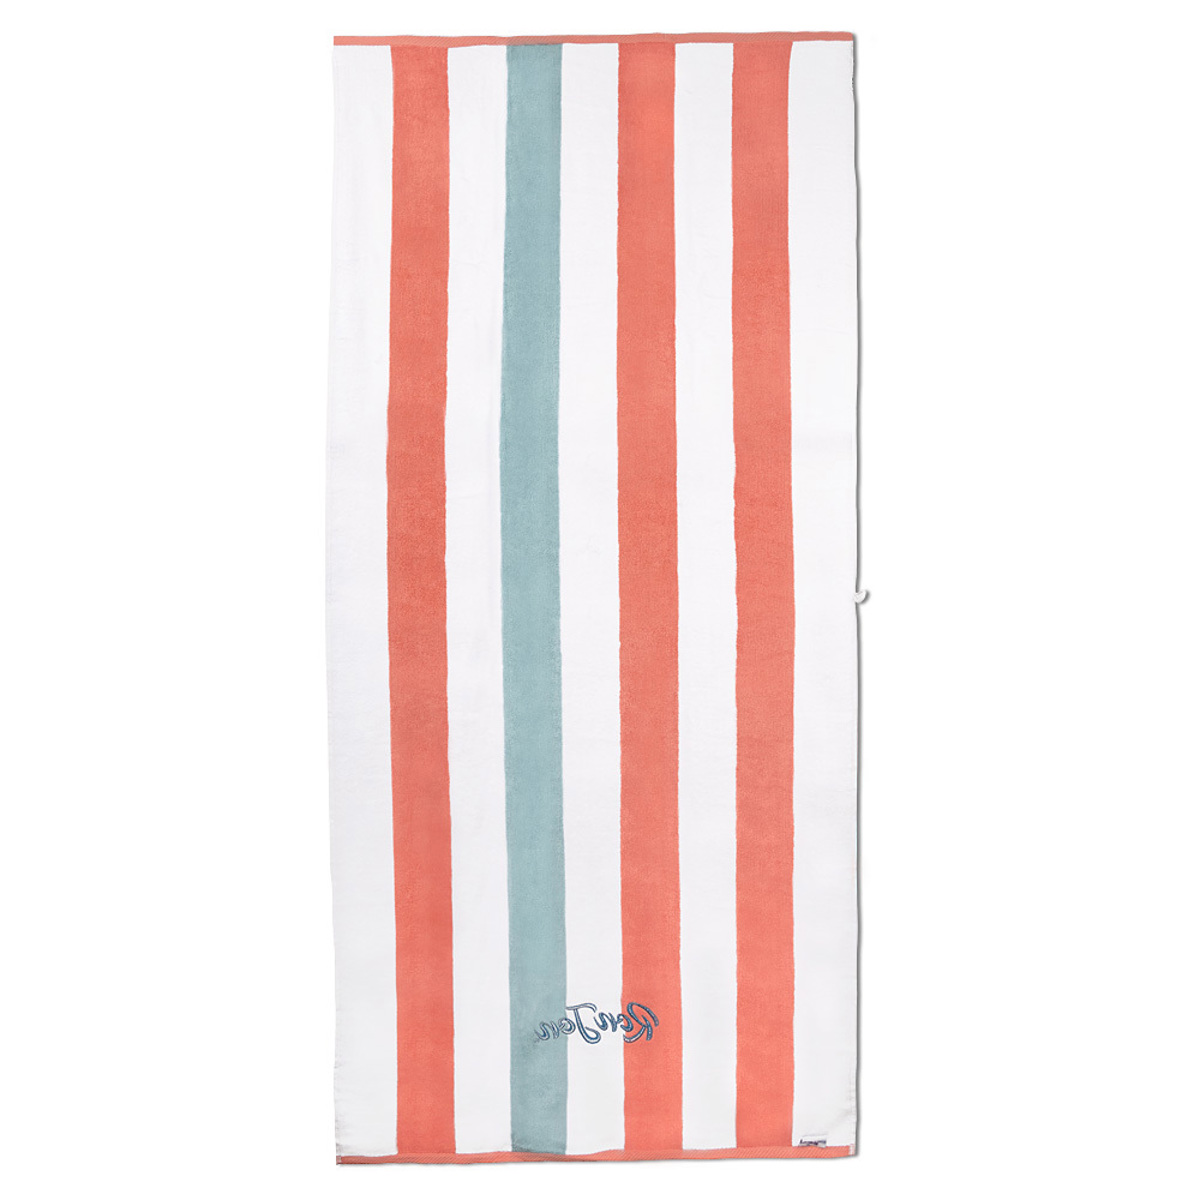 Textured Stripe Bath Towel